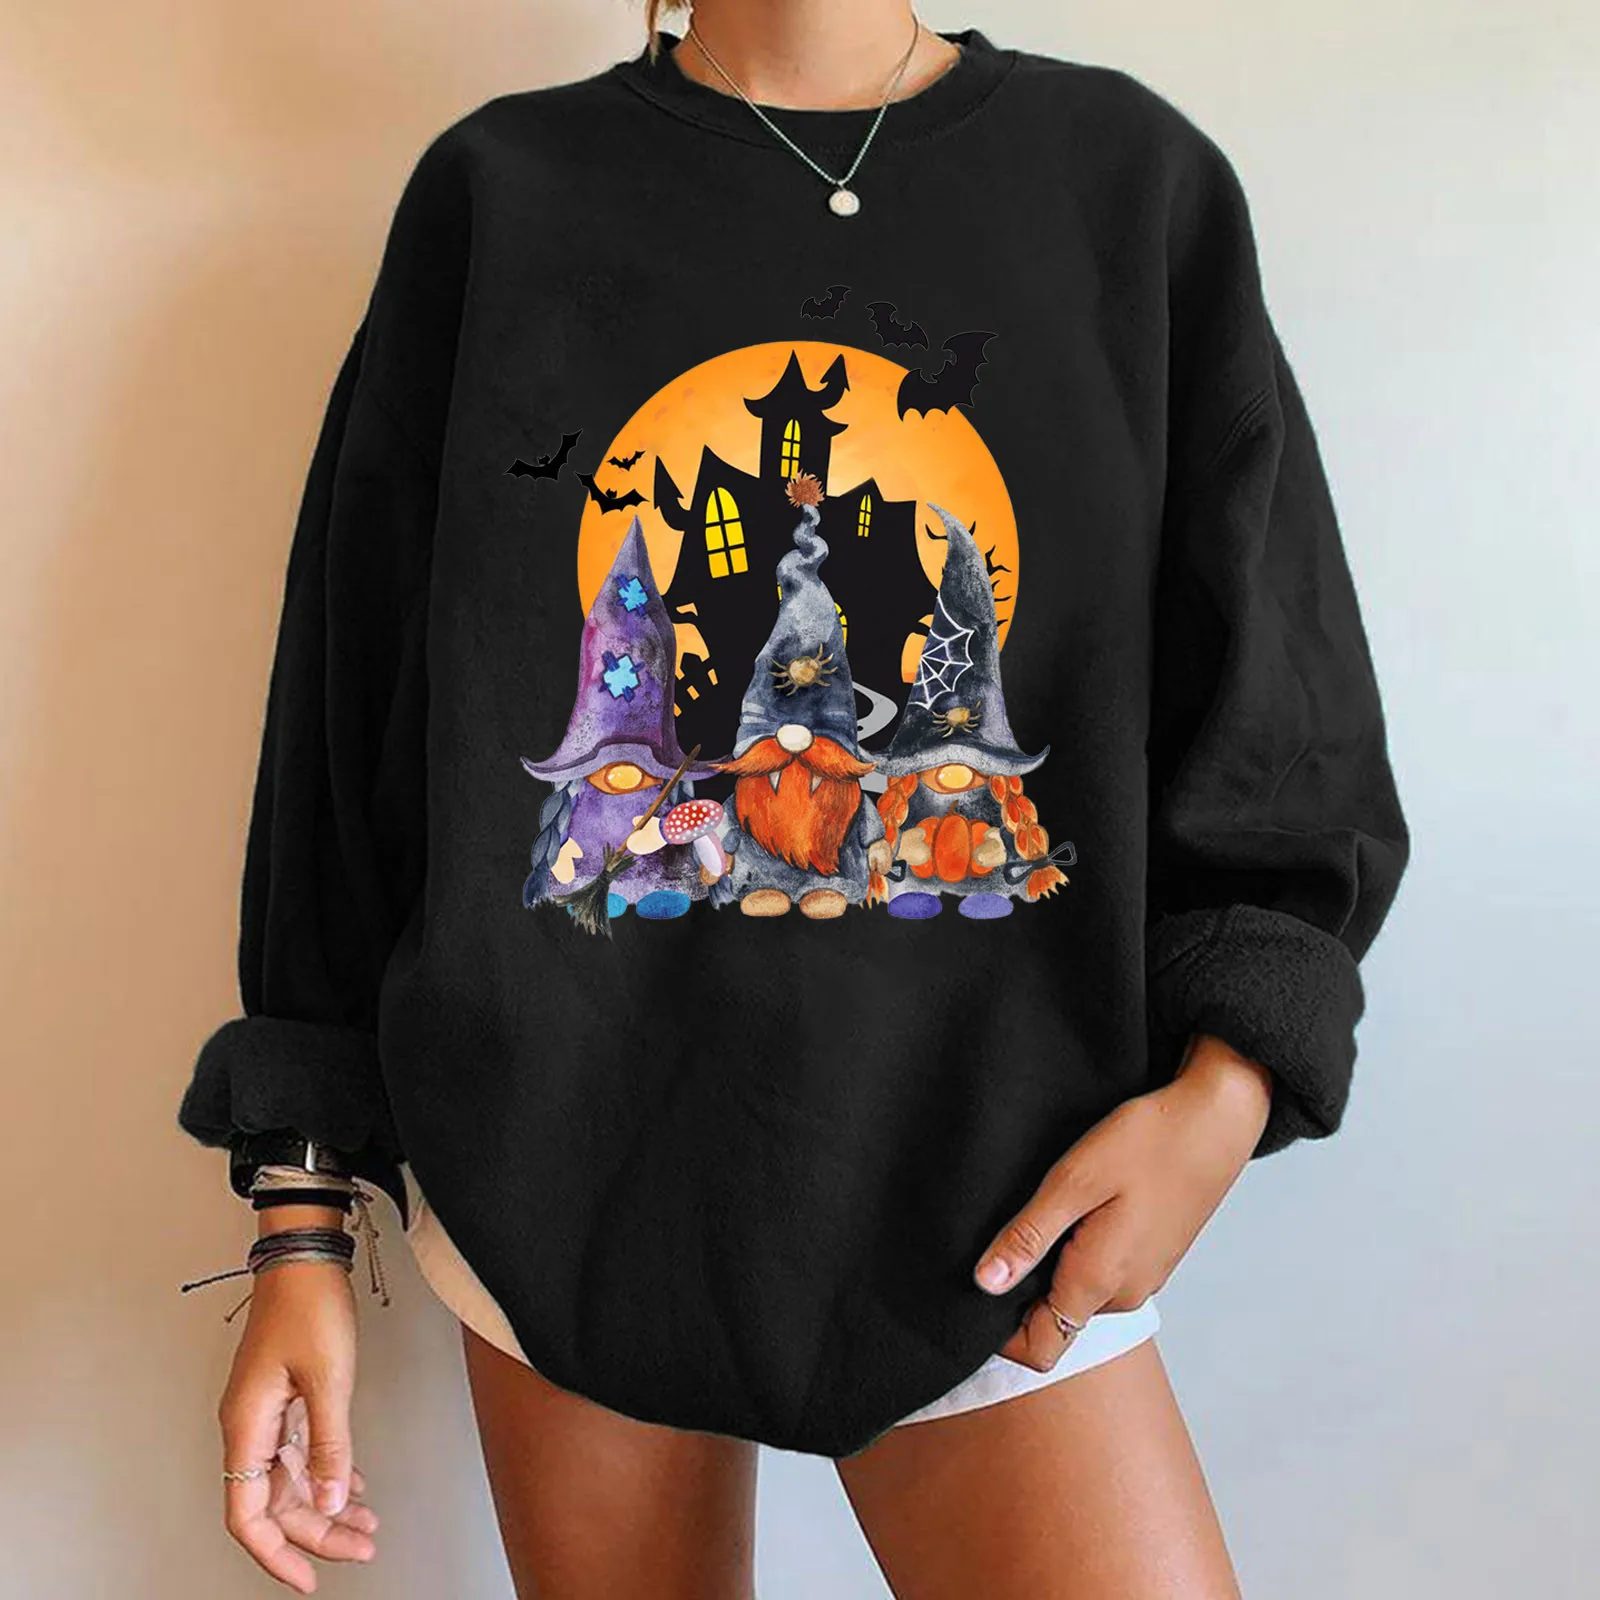 POTO Halloween Sweatshirts for Women Pumpkin Halloween Costumes Long Sleeve Pullover Tops Crewneck Casual Sweater Blouse 